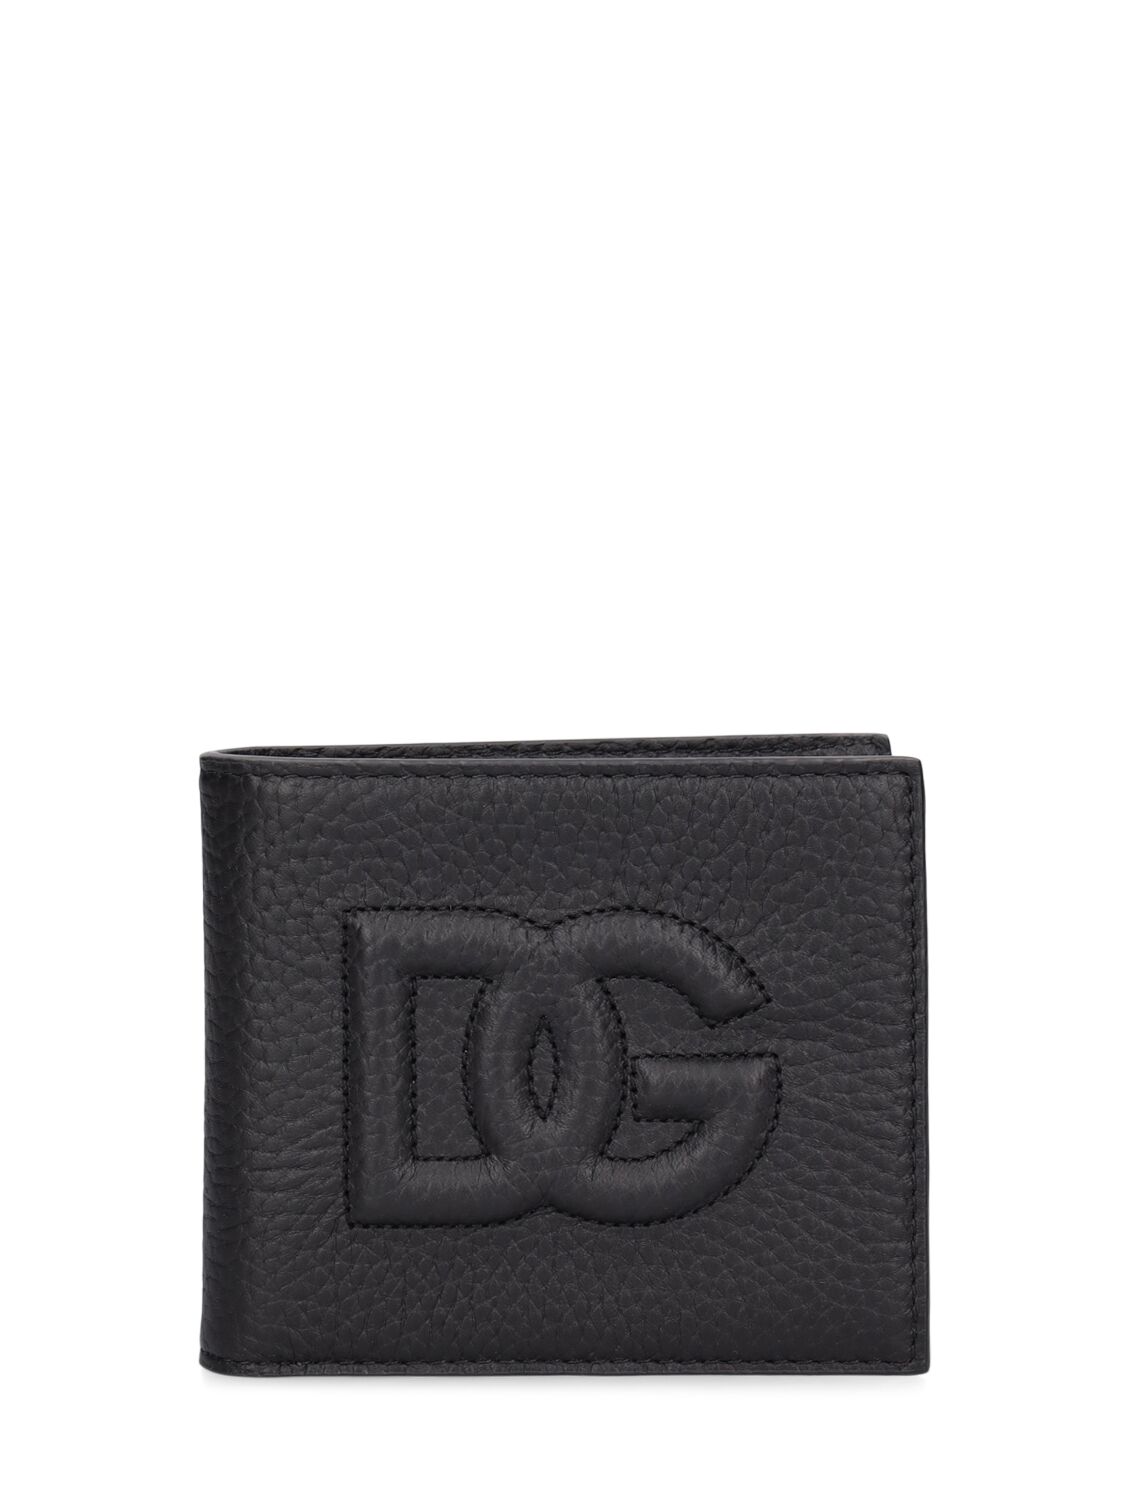 DG LOGO压纹折叠钱包